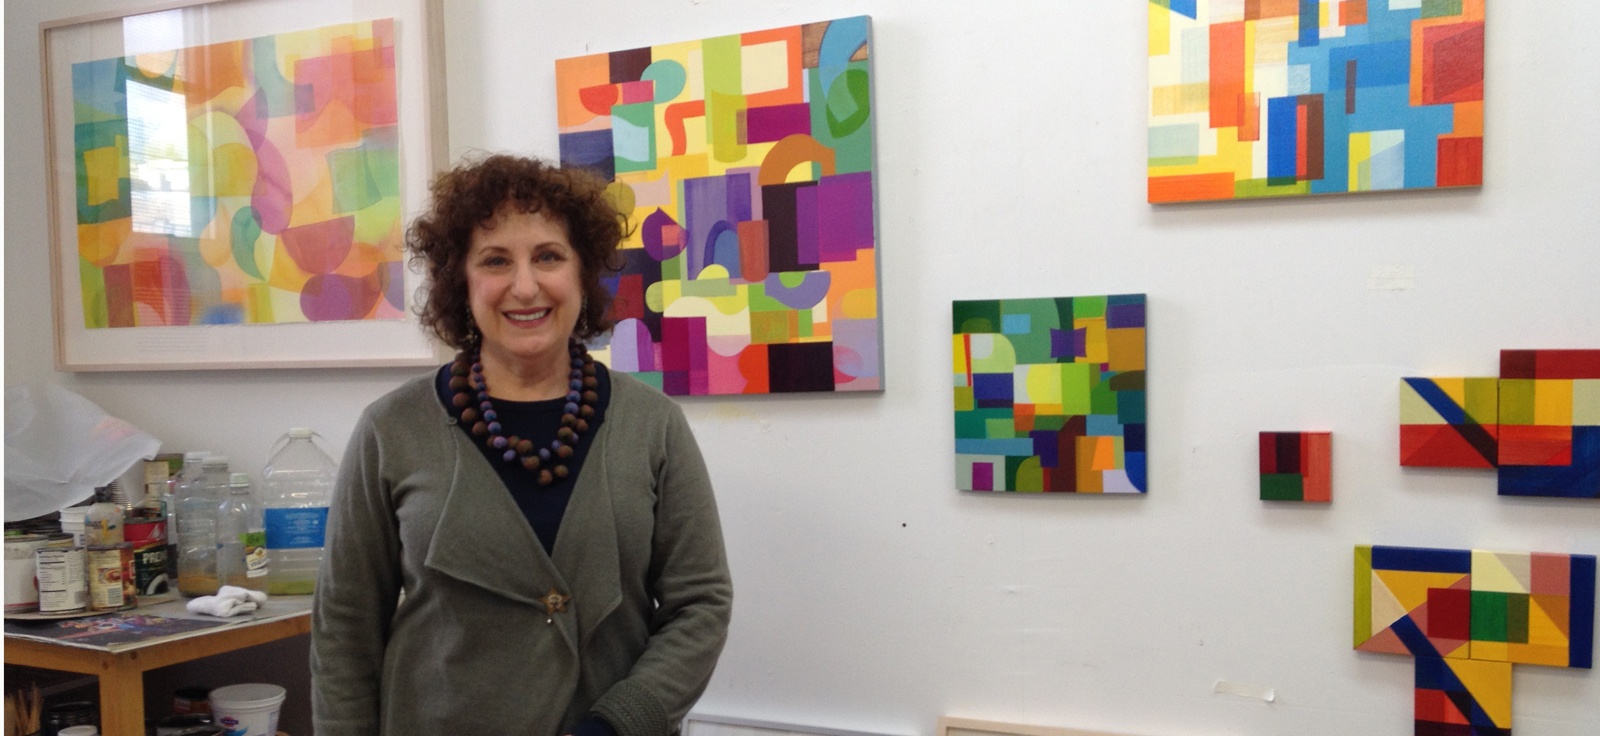 Dianne Lachman, painter, in her studio